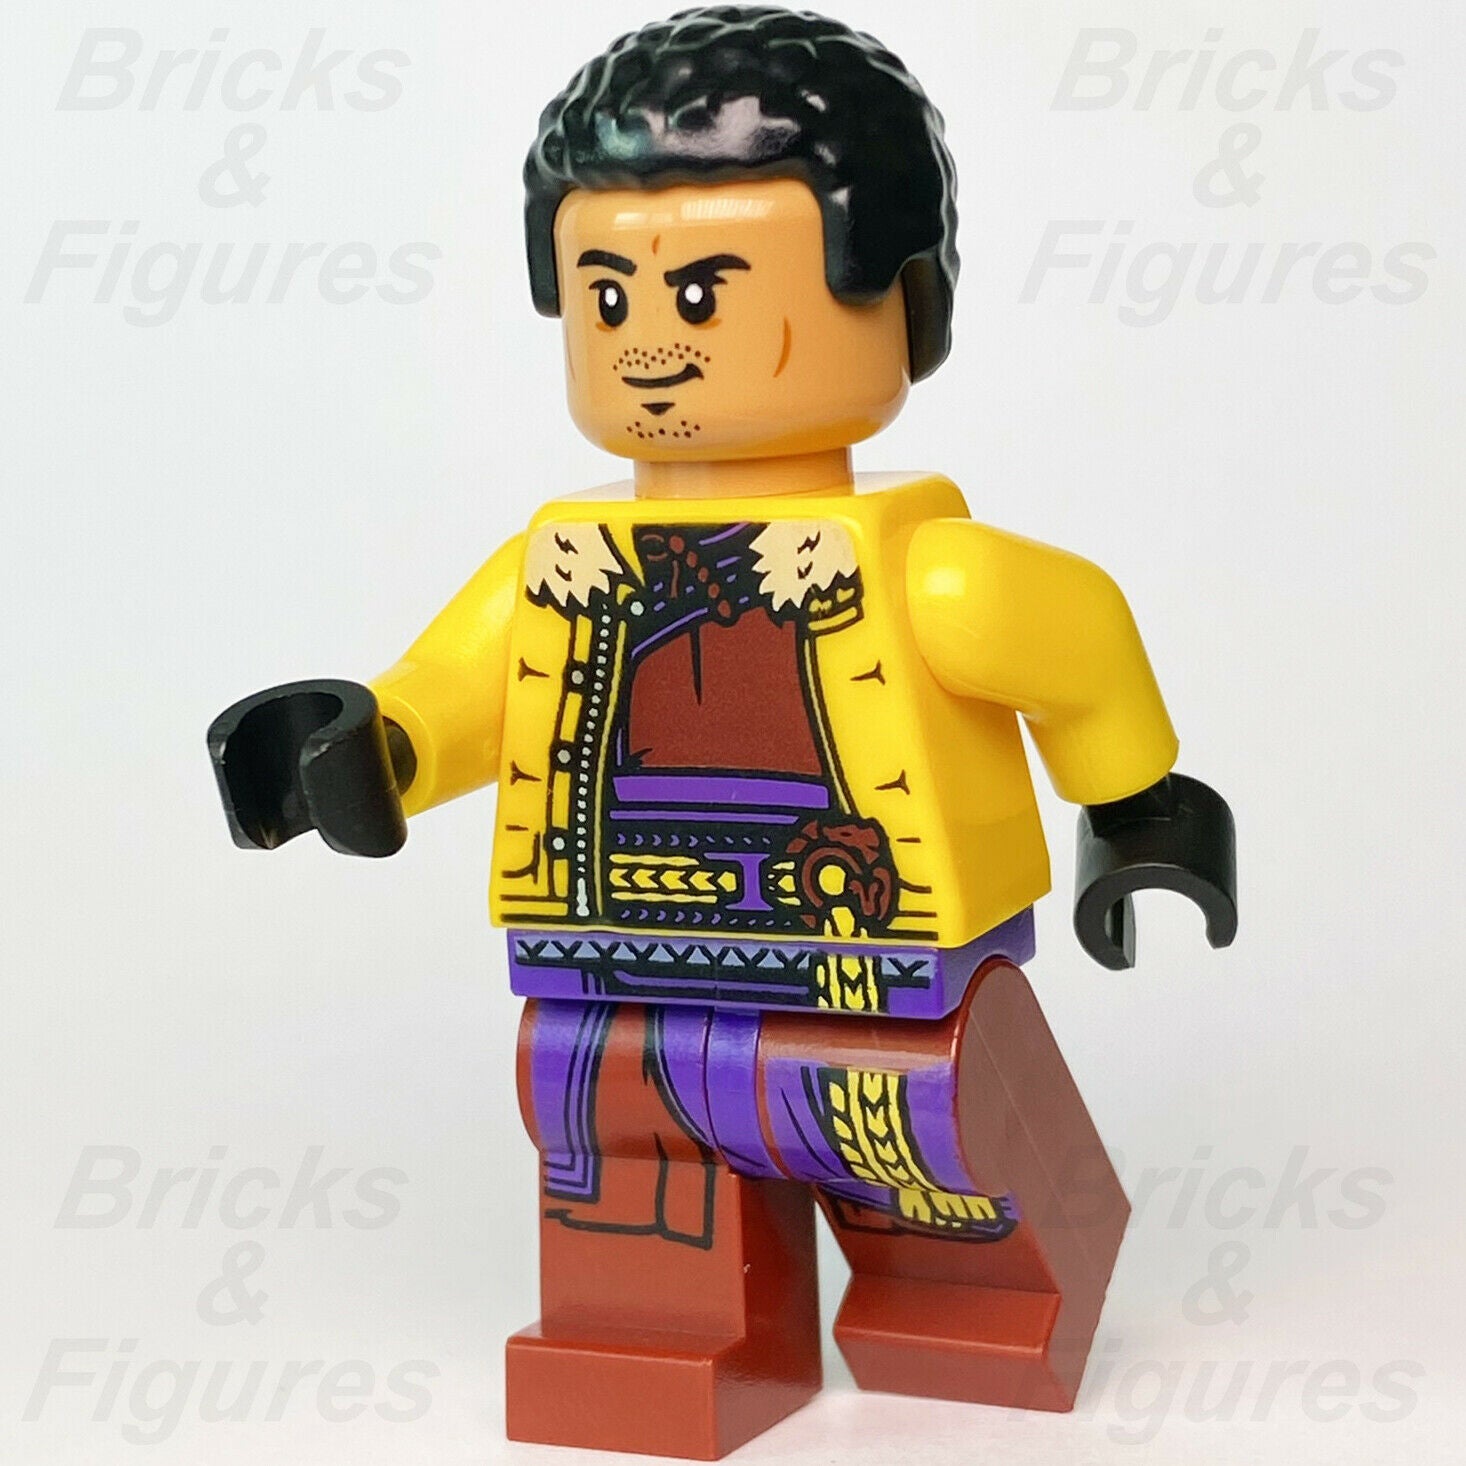 Marvel Super Heroes LEGO Wong Spider-Man No Way Home Minifigure 76185 sh779 - Bricks & Figures